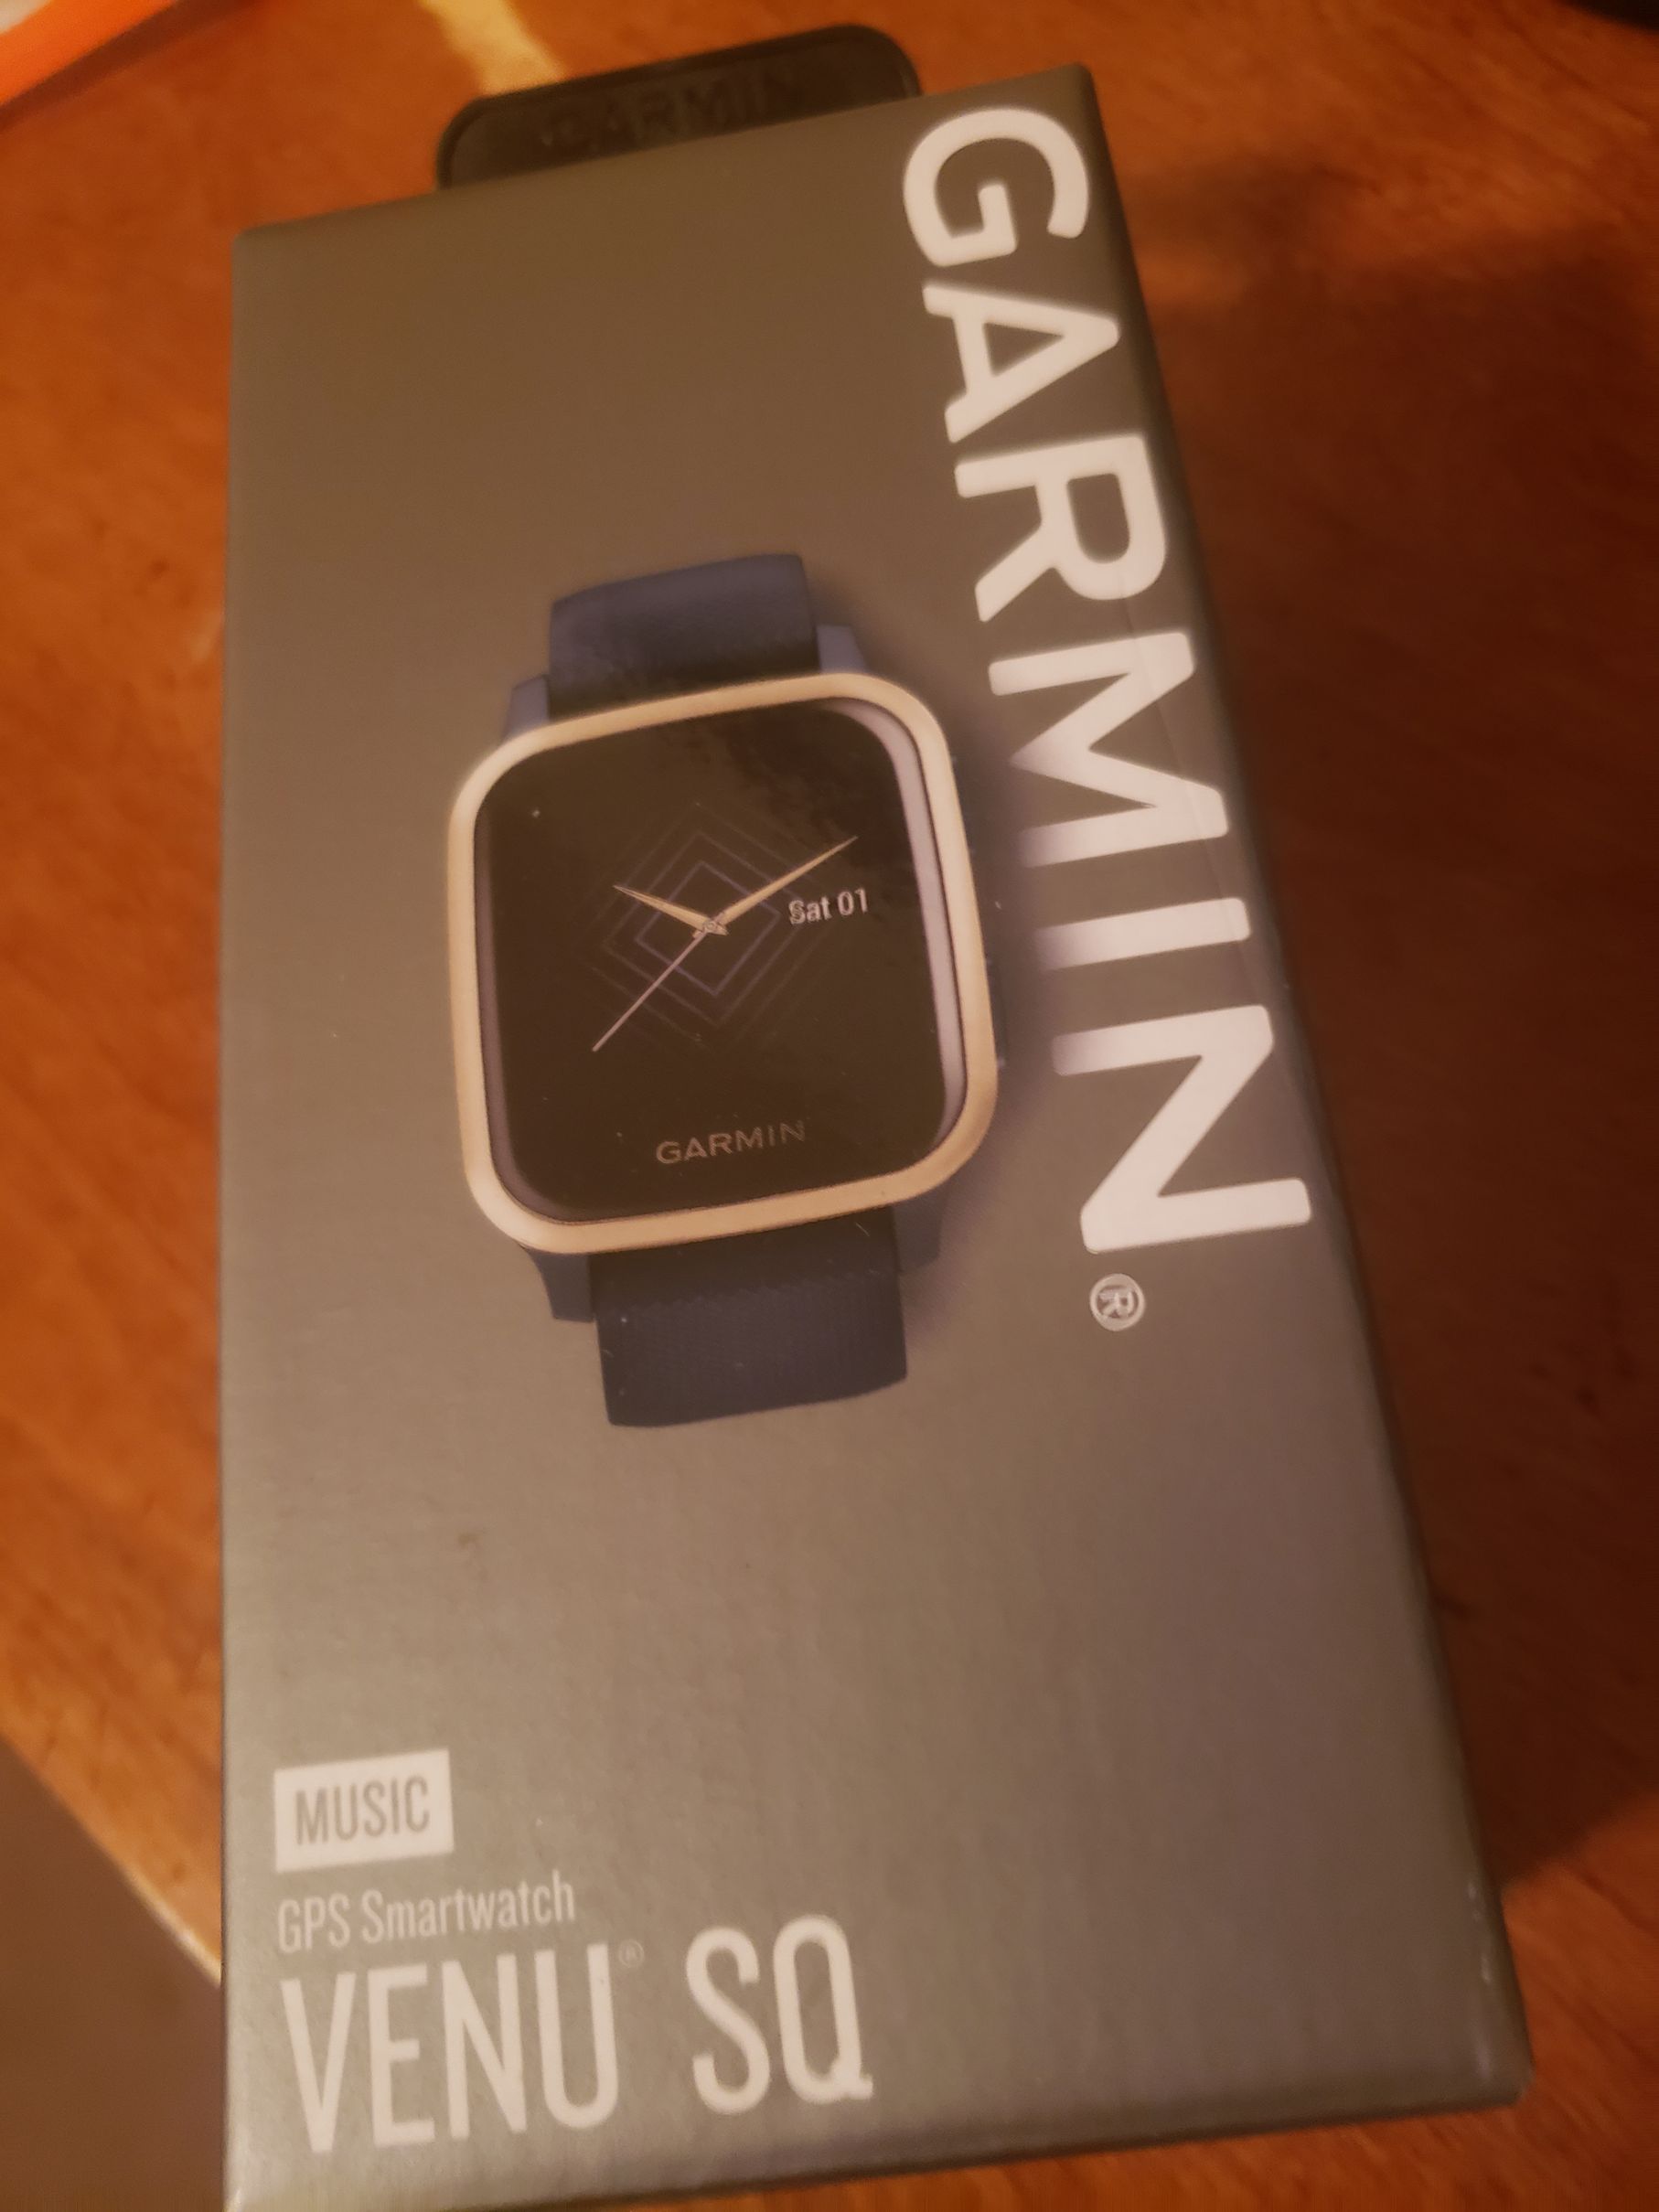 Garmin Smartwatch - first day - resized.jpg